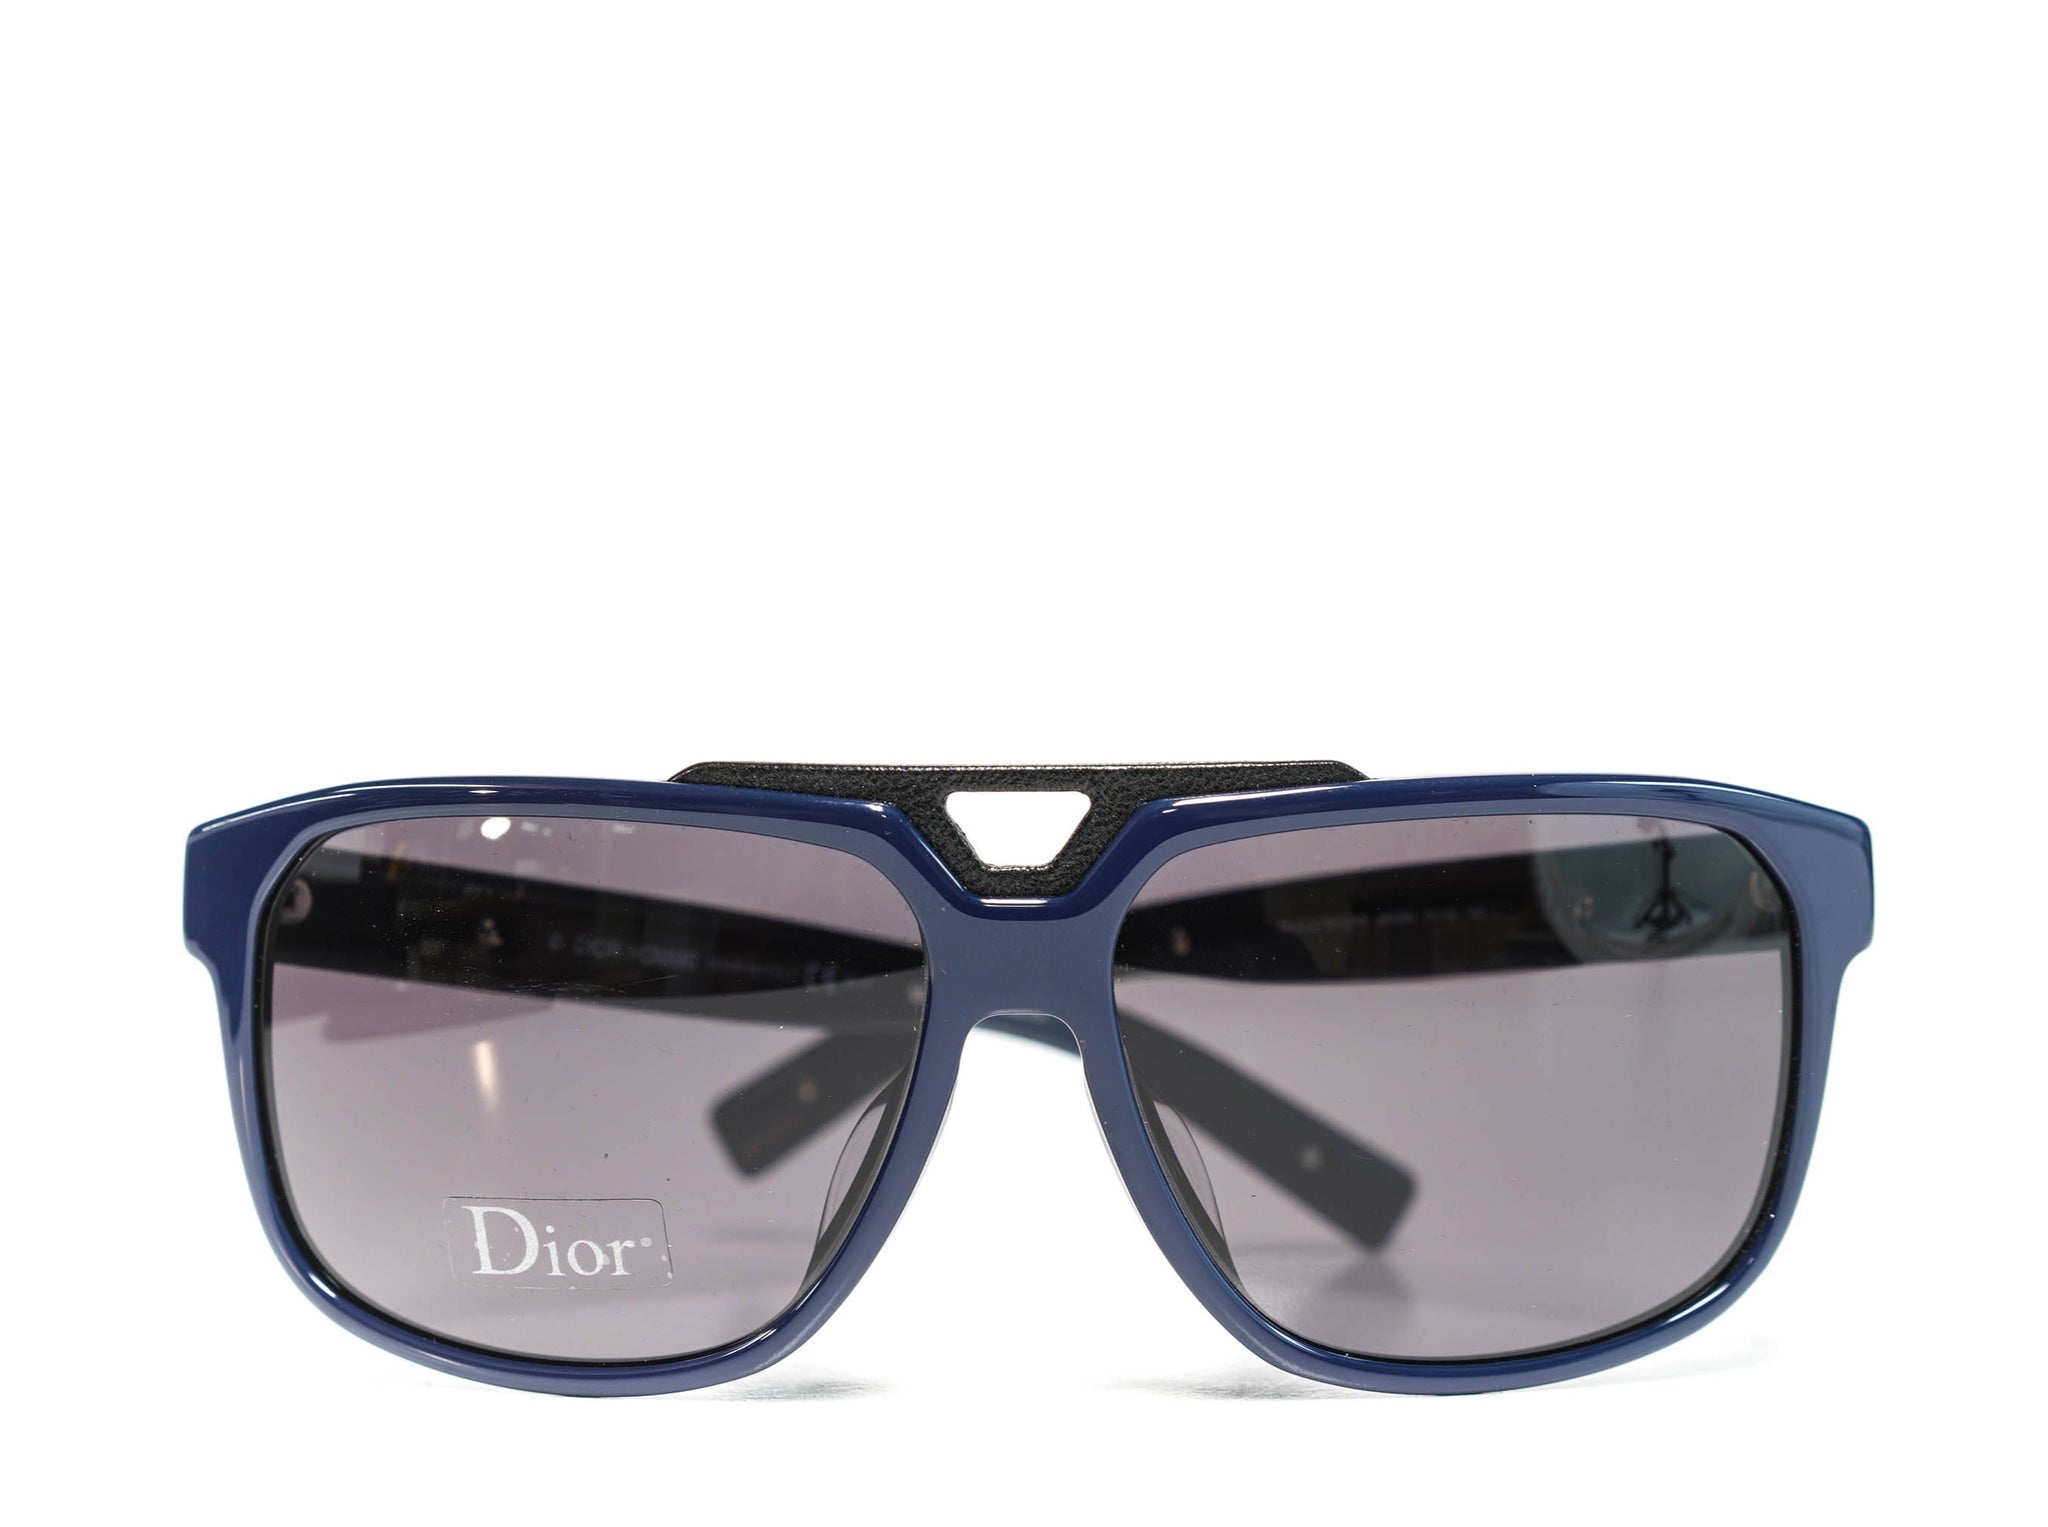 Dior Men's Black Tie 2 Blue Sunglasses NKT03A683S